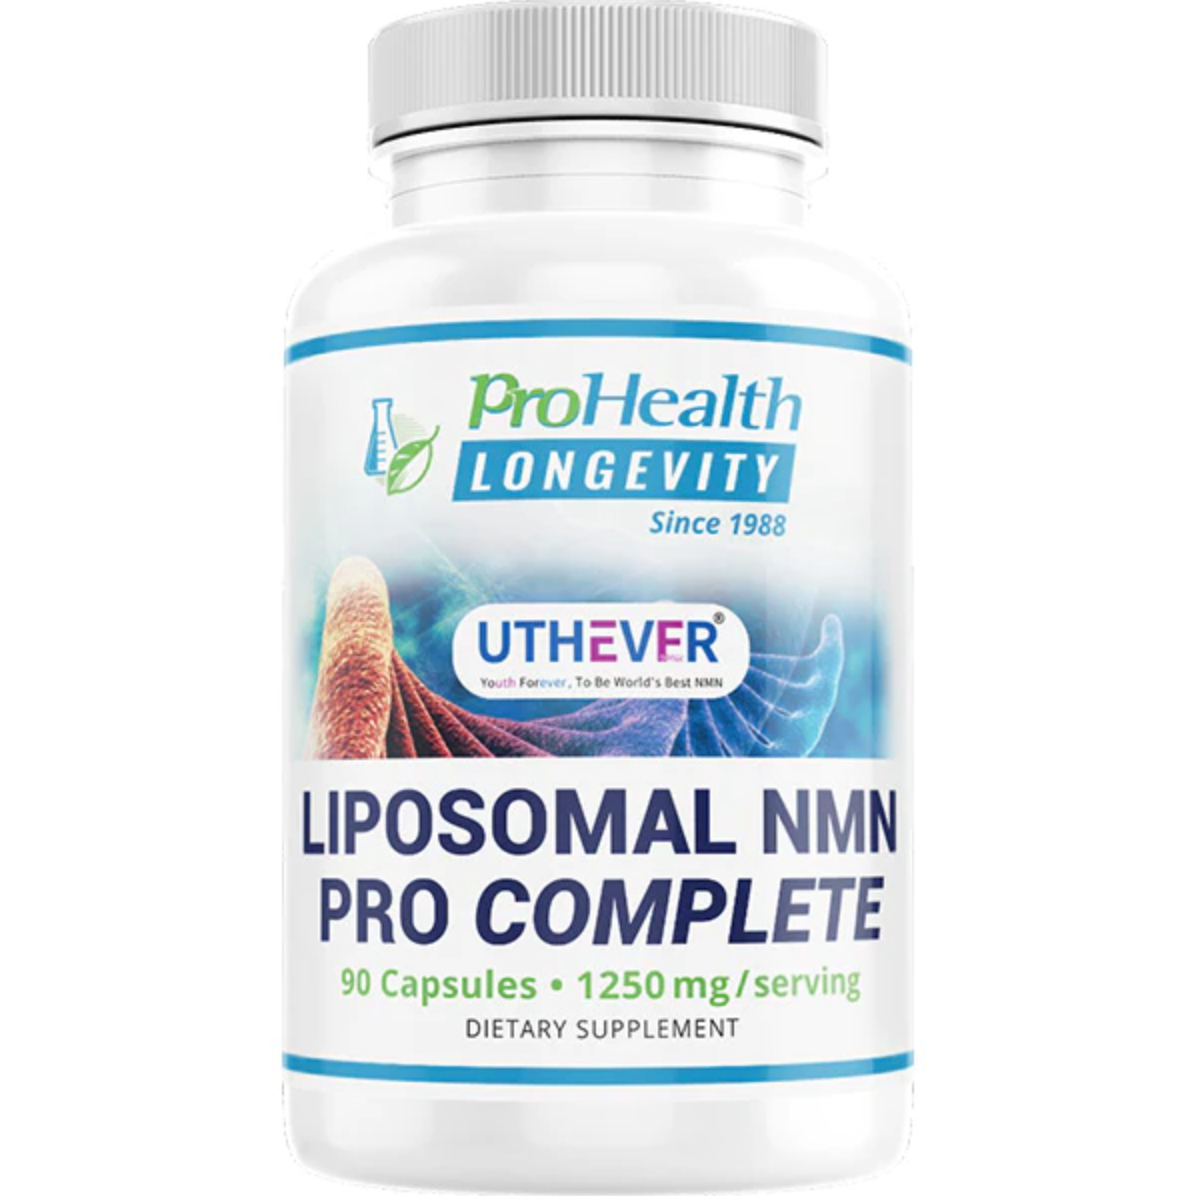 ProHealth Longevity Liposomal NMN Pro Complete 1250mg 90 Caps